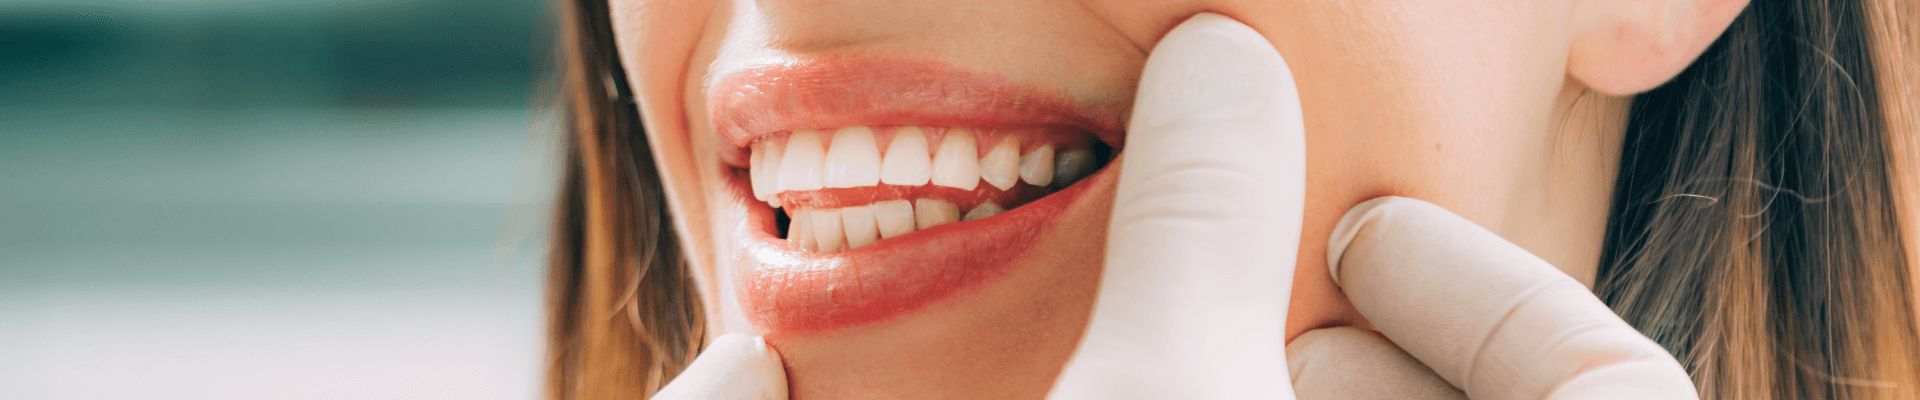 Odontoiatria ed Estetica del sorriso